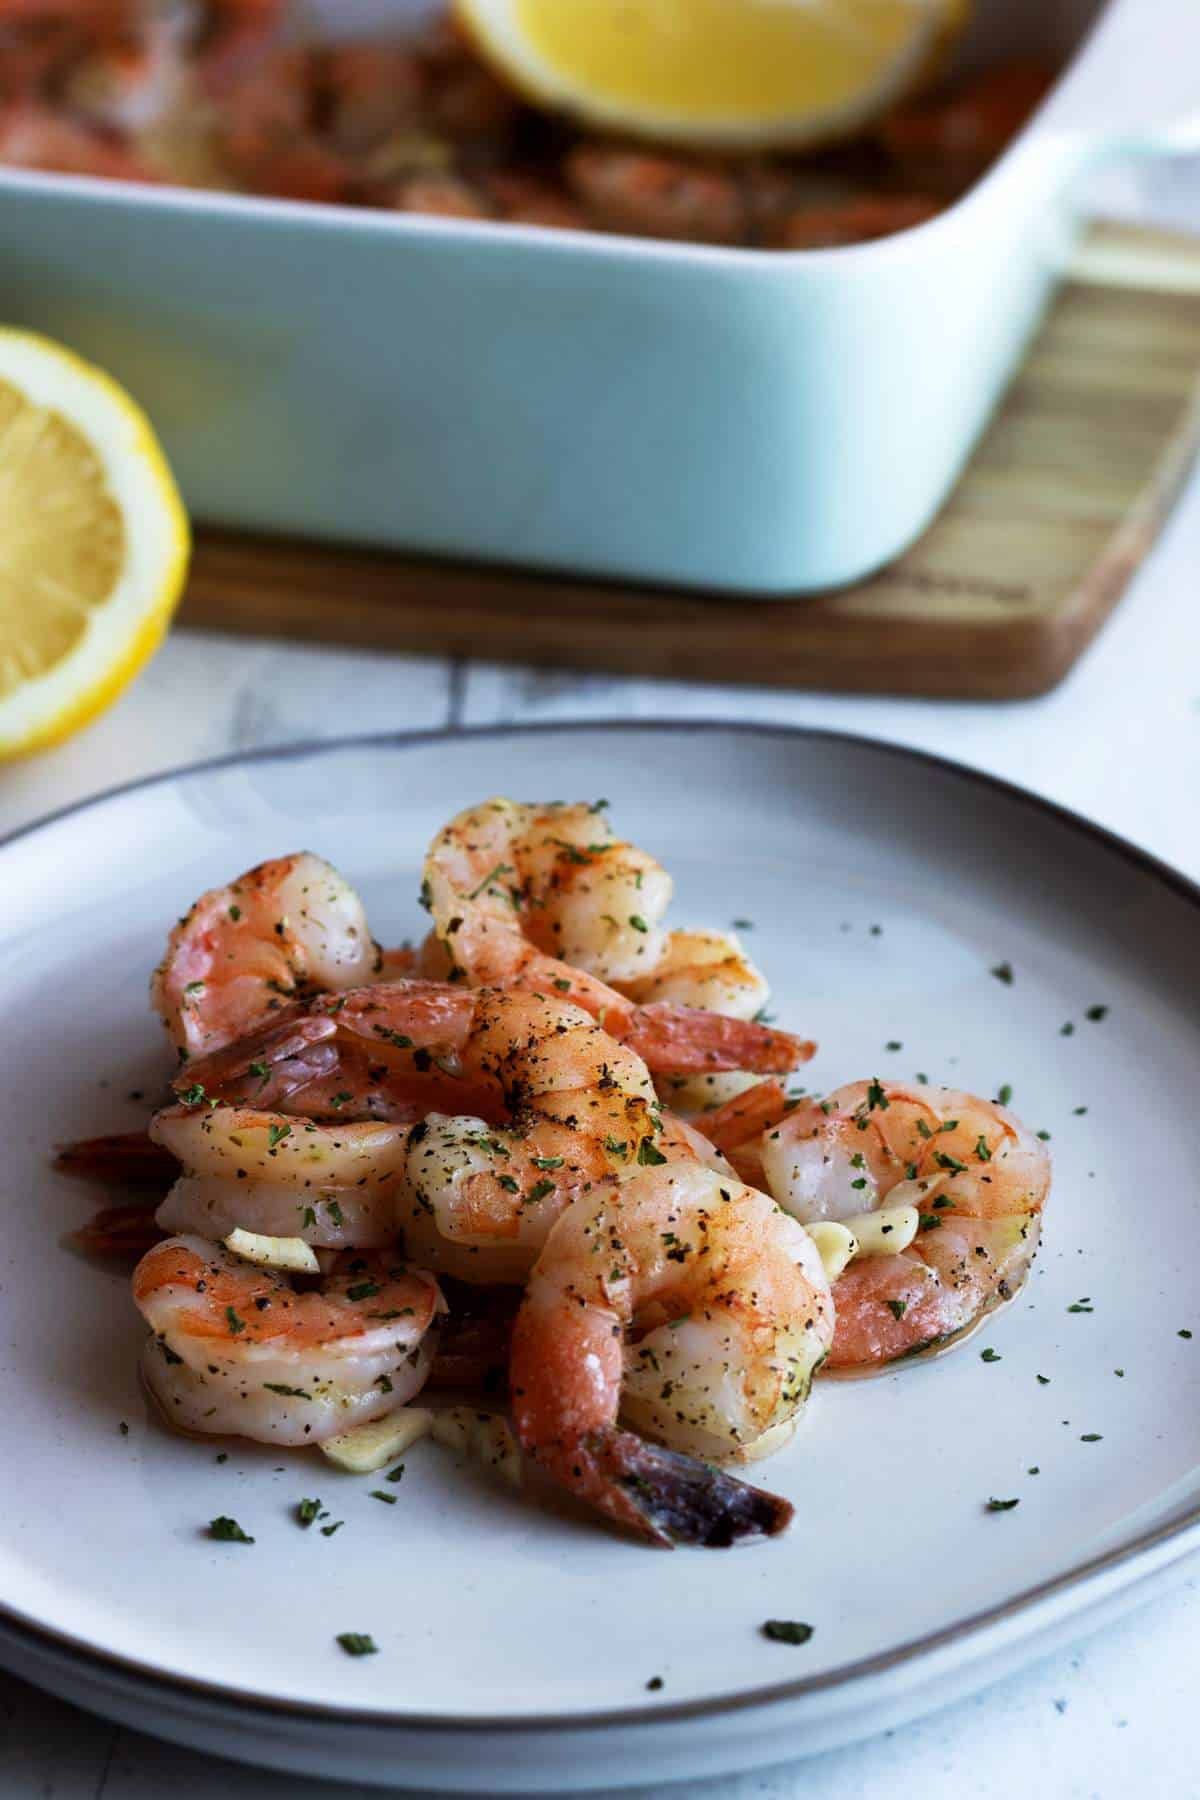 Easy-baked shrimp on a plate.